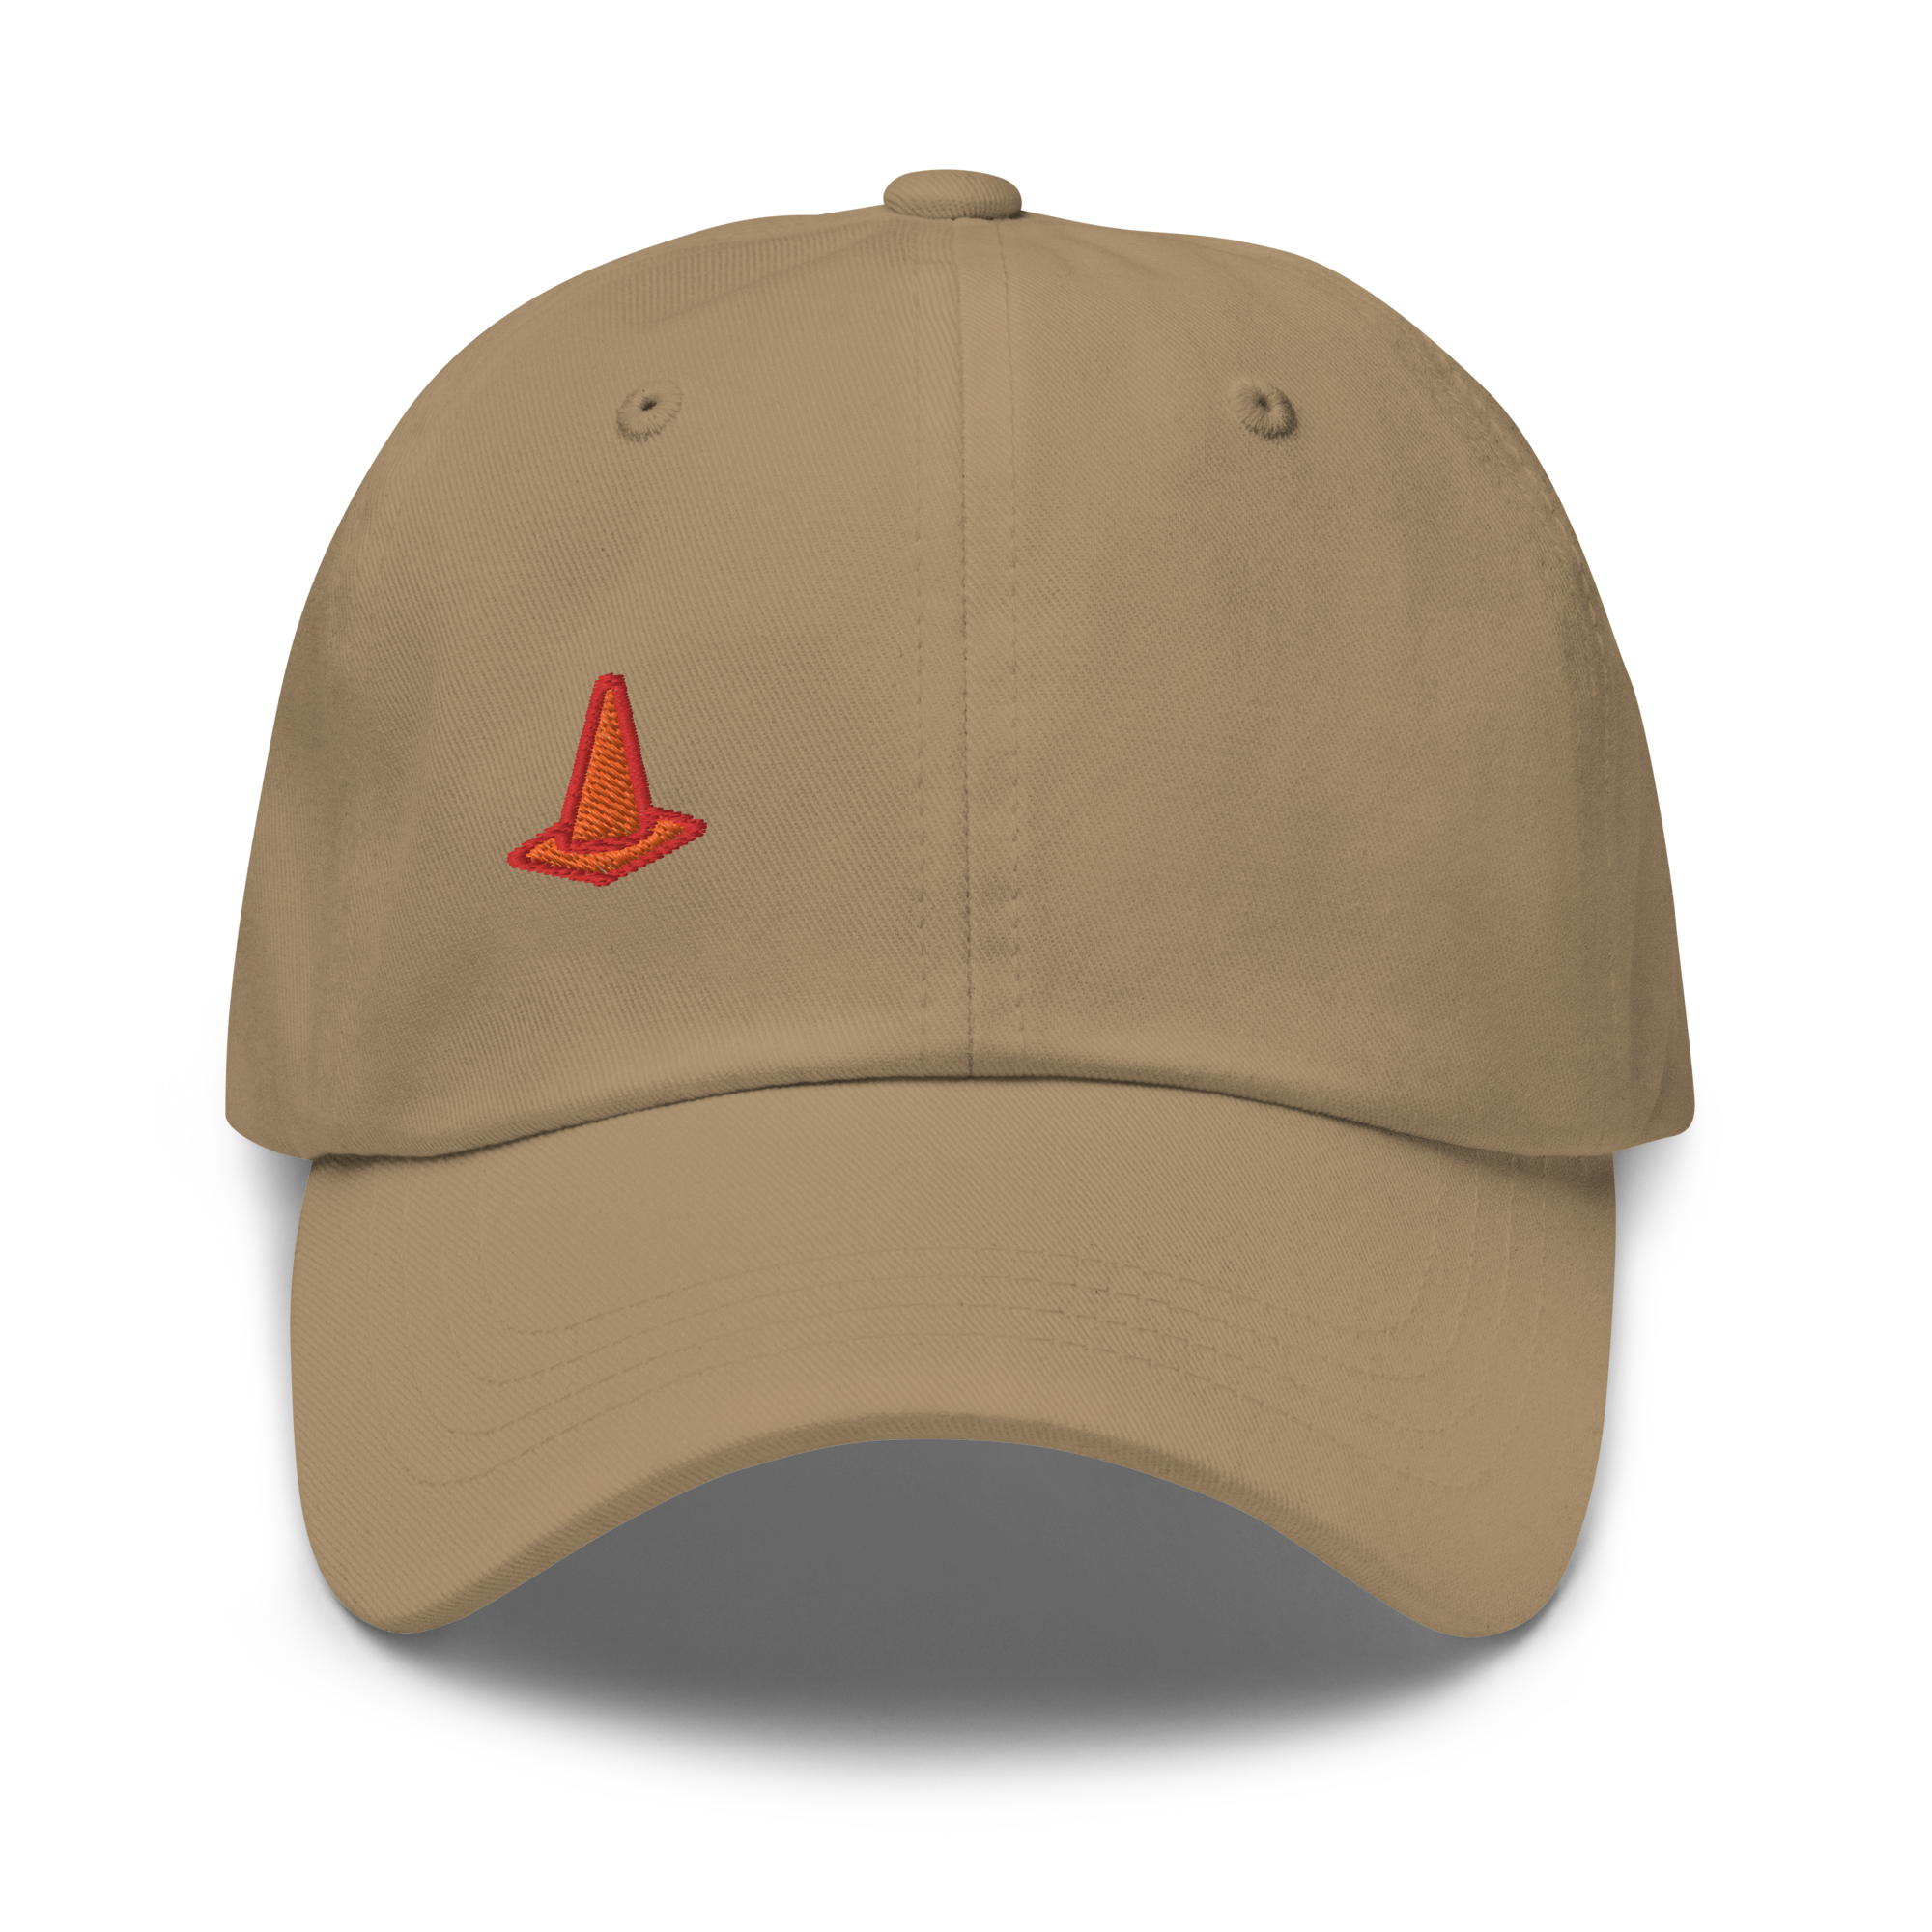 Coneseed Cap (Dad hat)